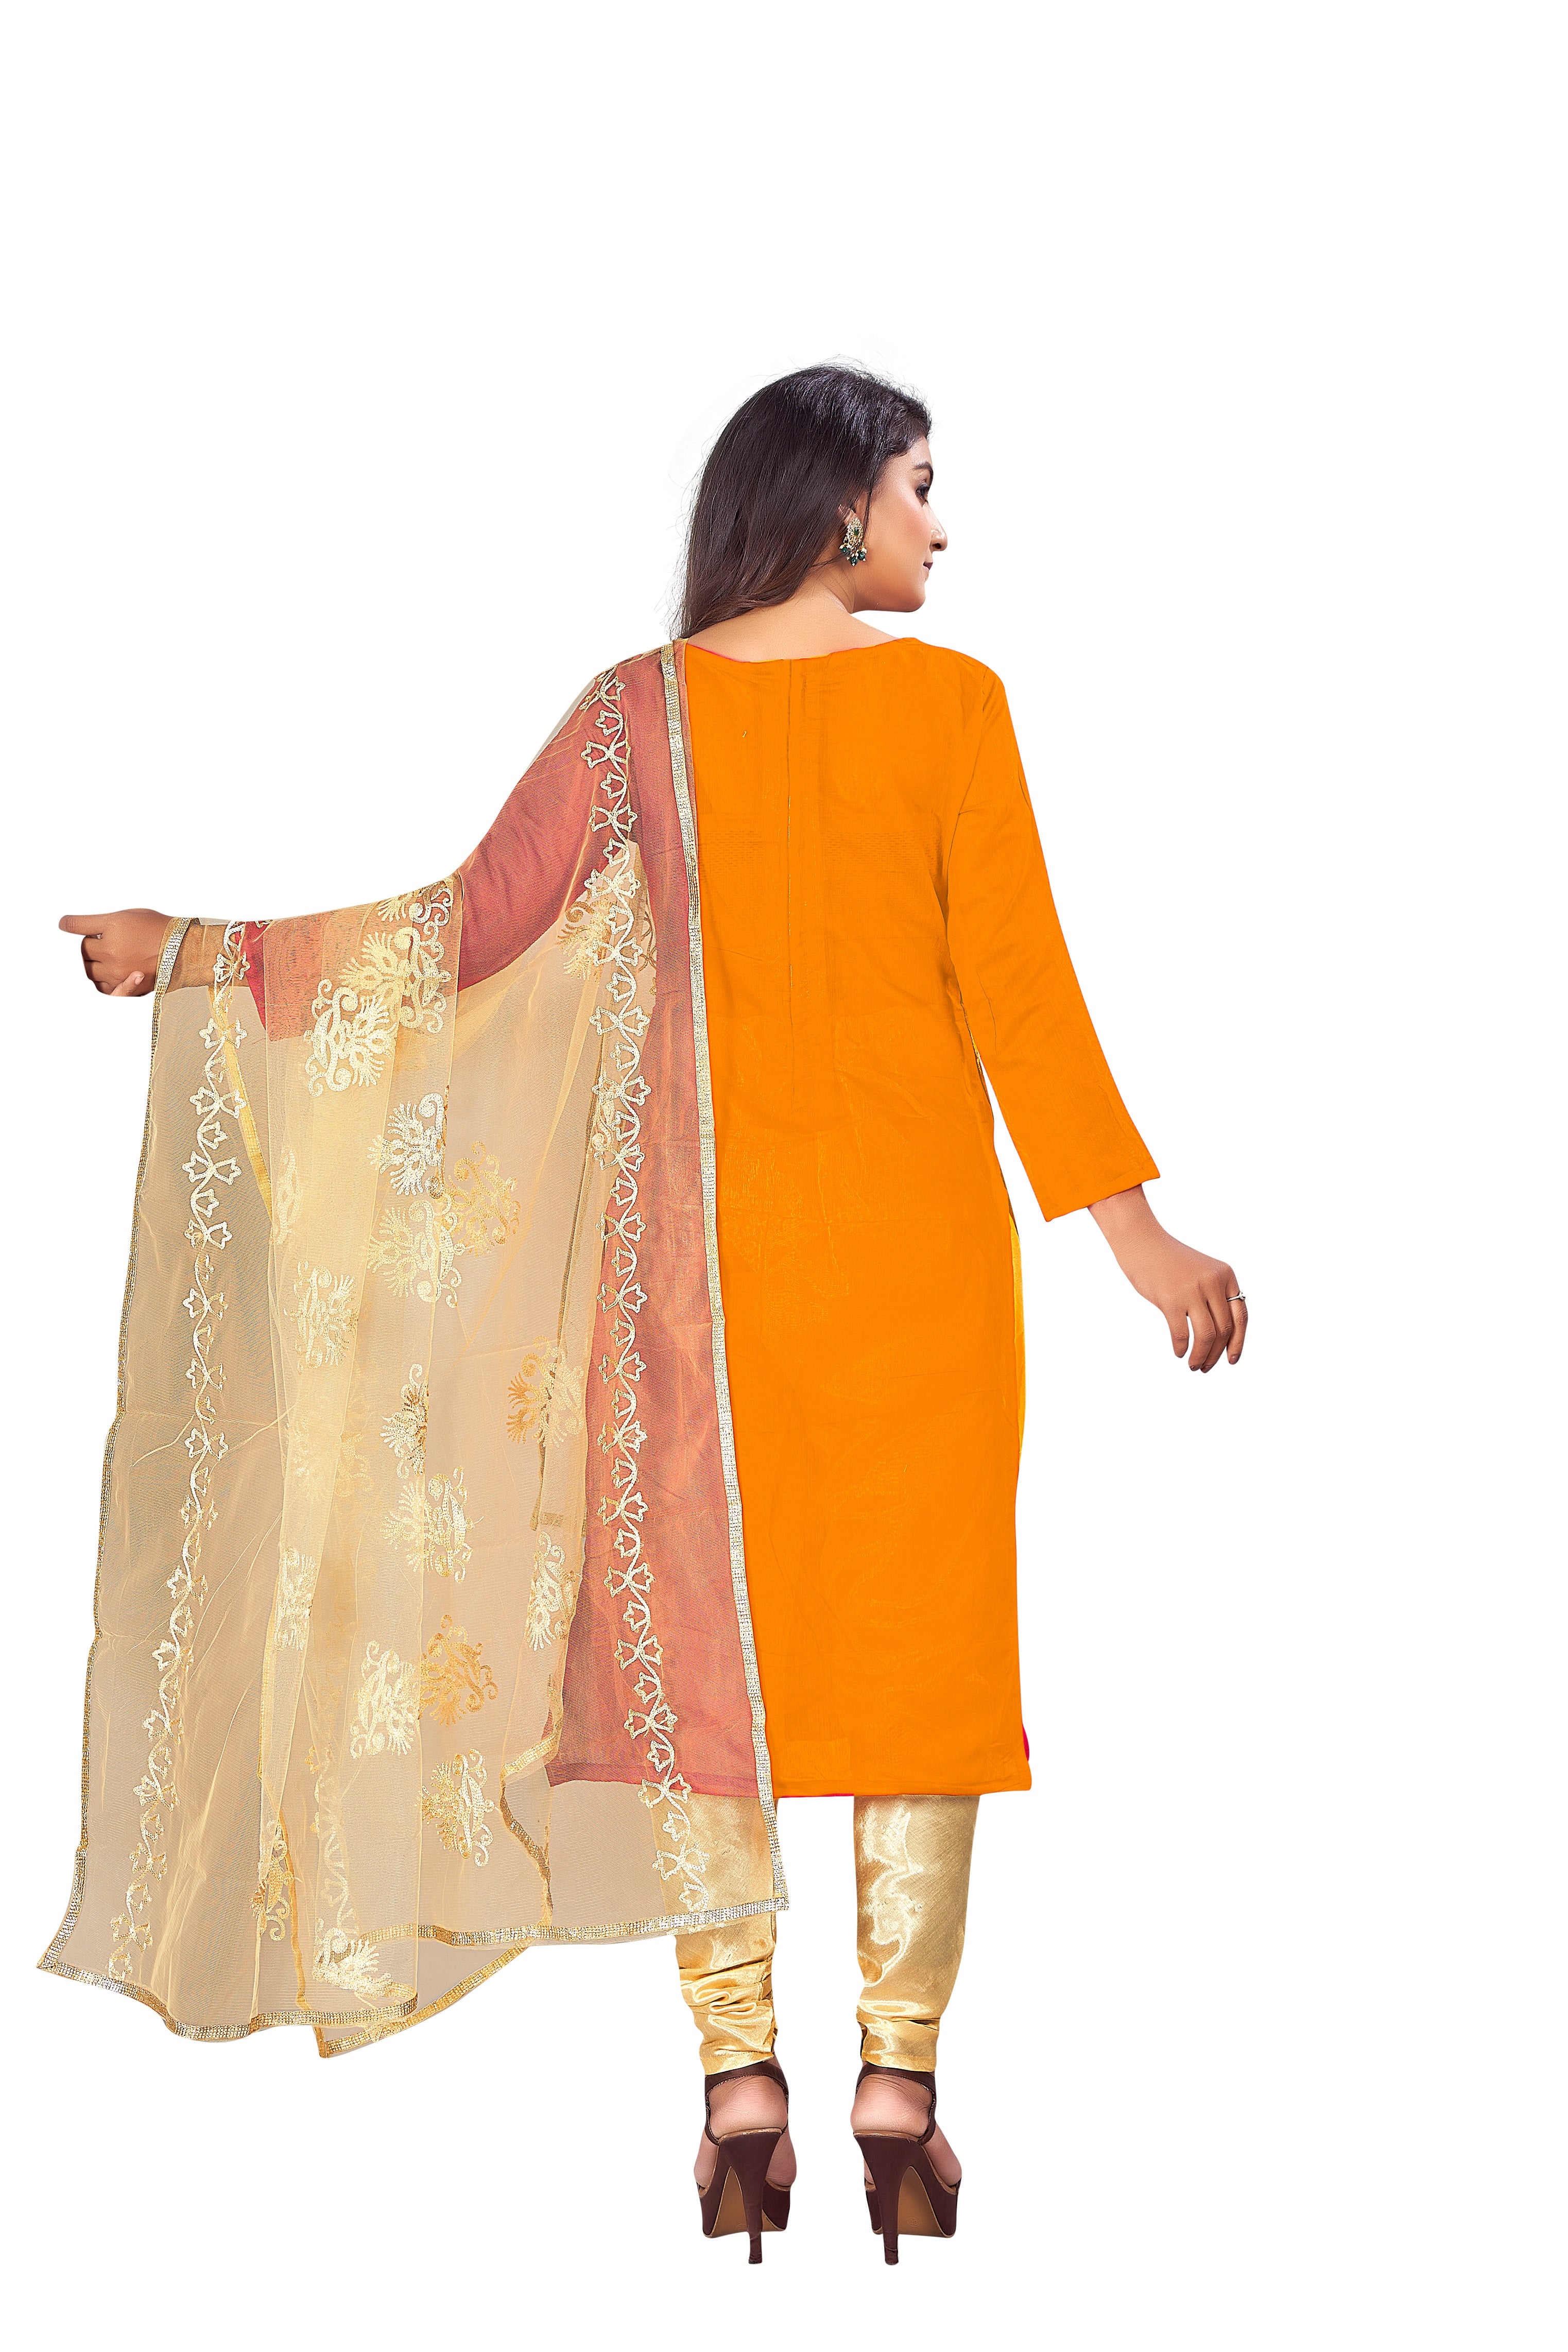 Women's Light Yellow Colour Semi-Stitched Suit Sets - Dwija Fashion